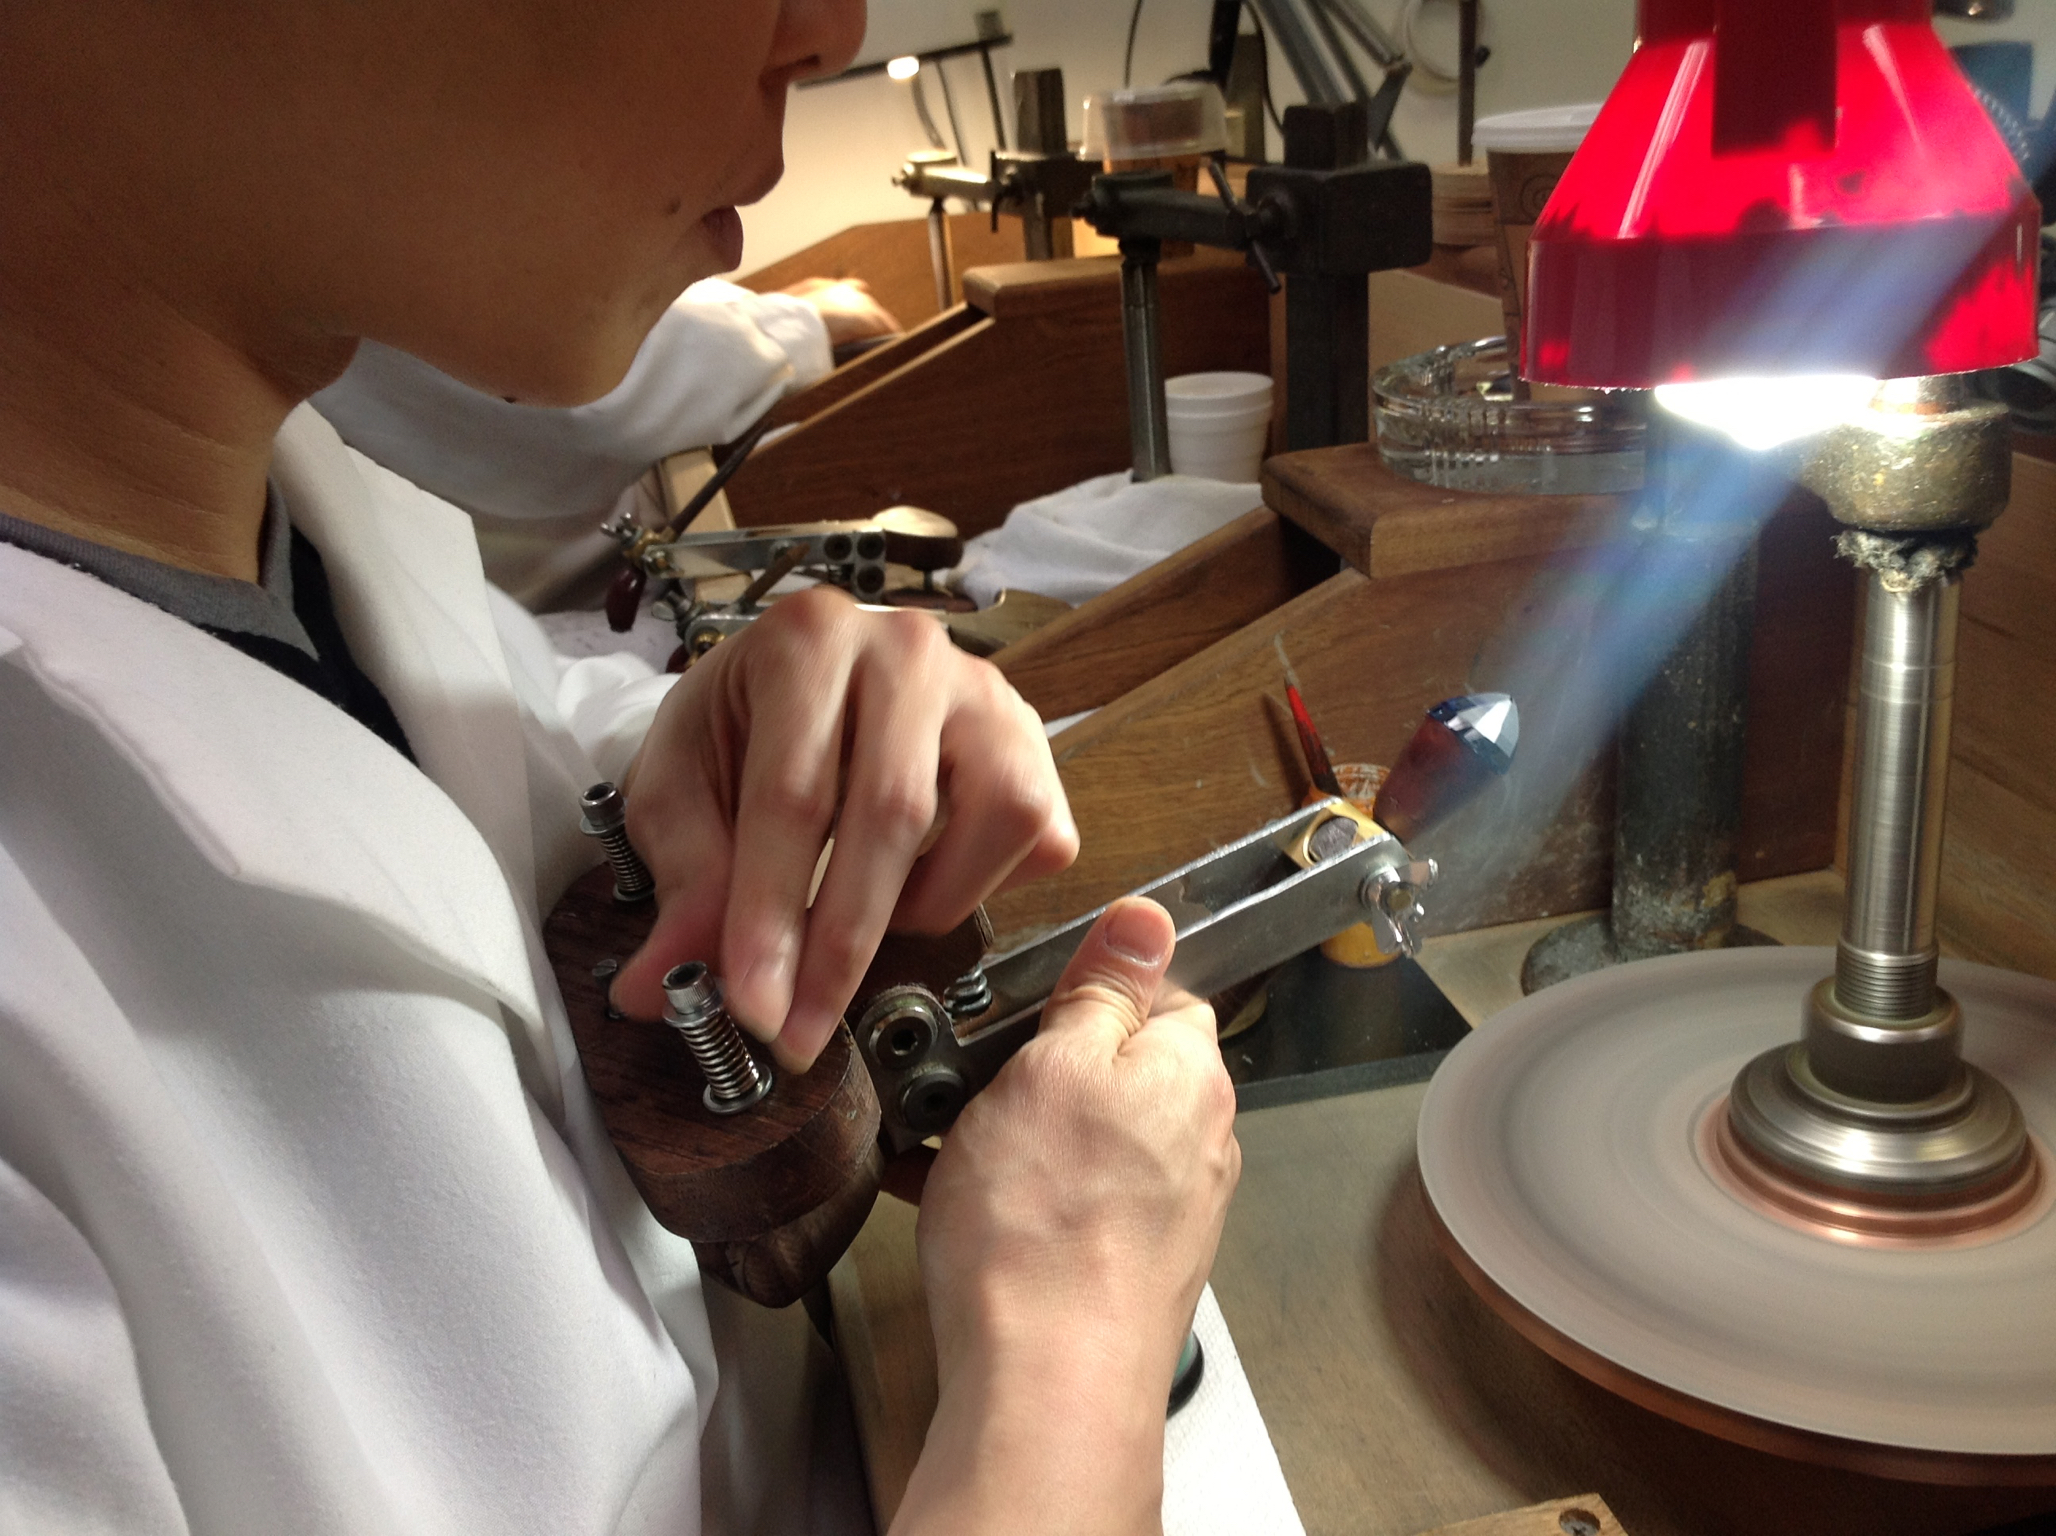 The polishing of a 100+ carat sapphire